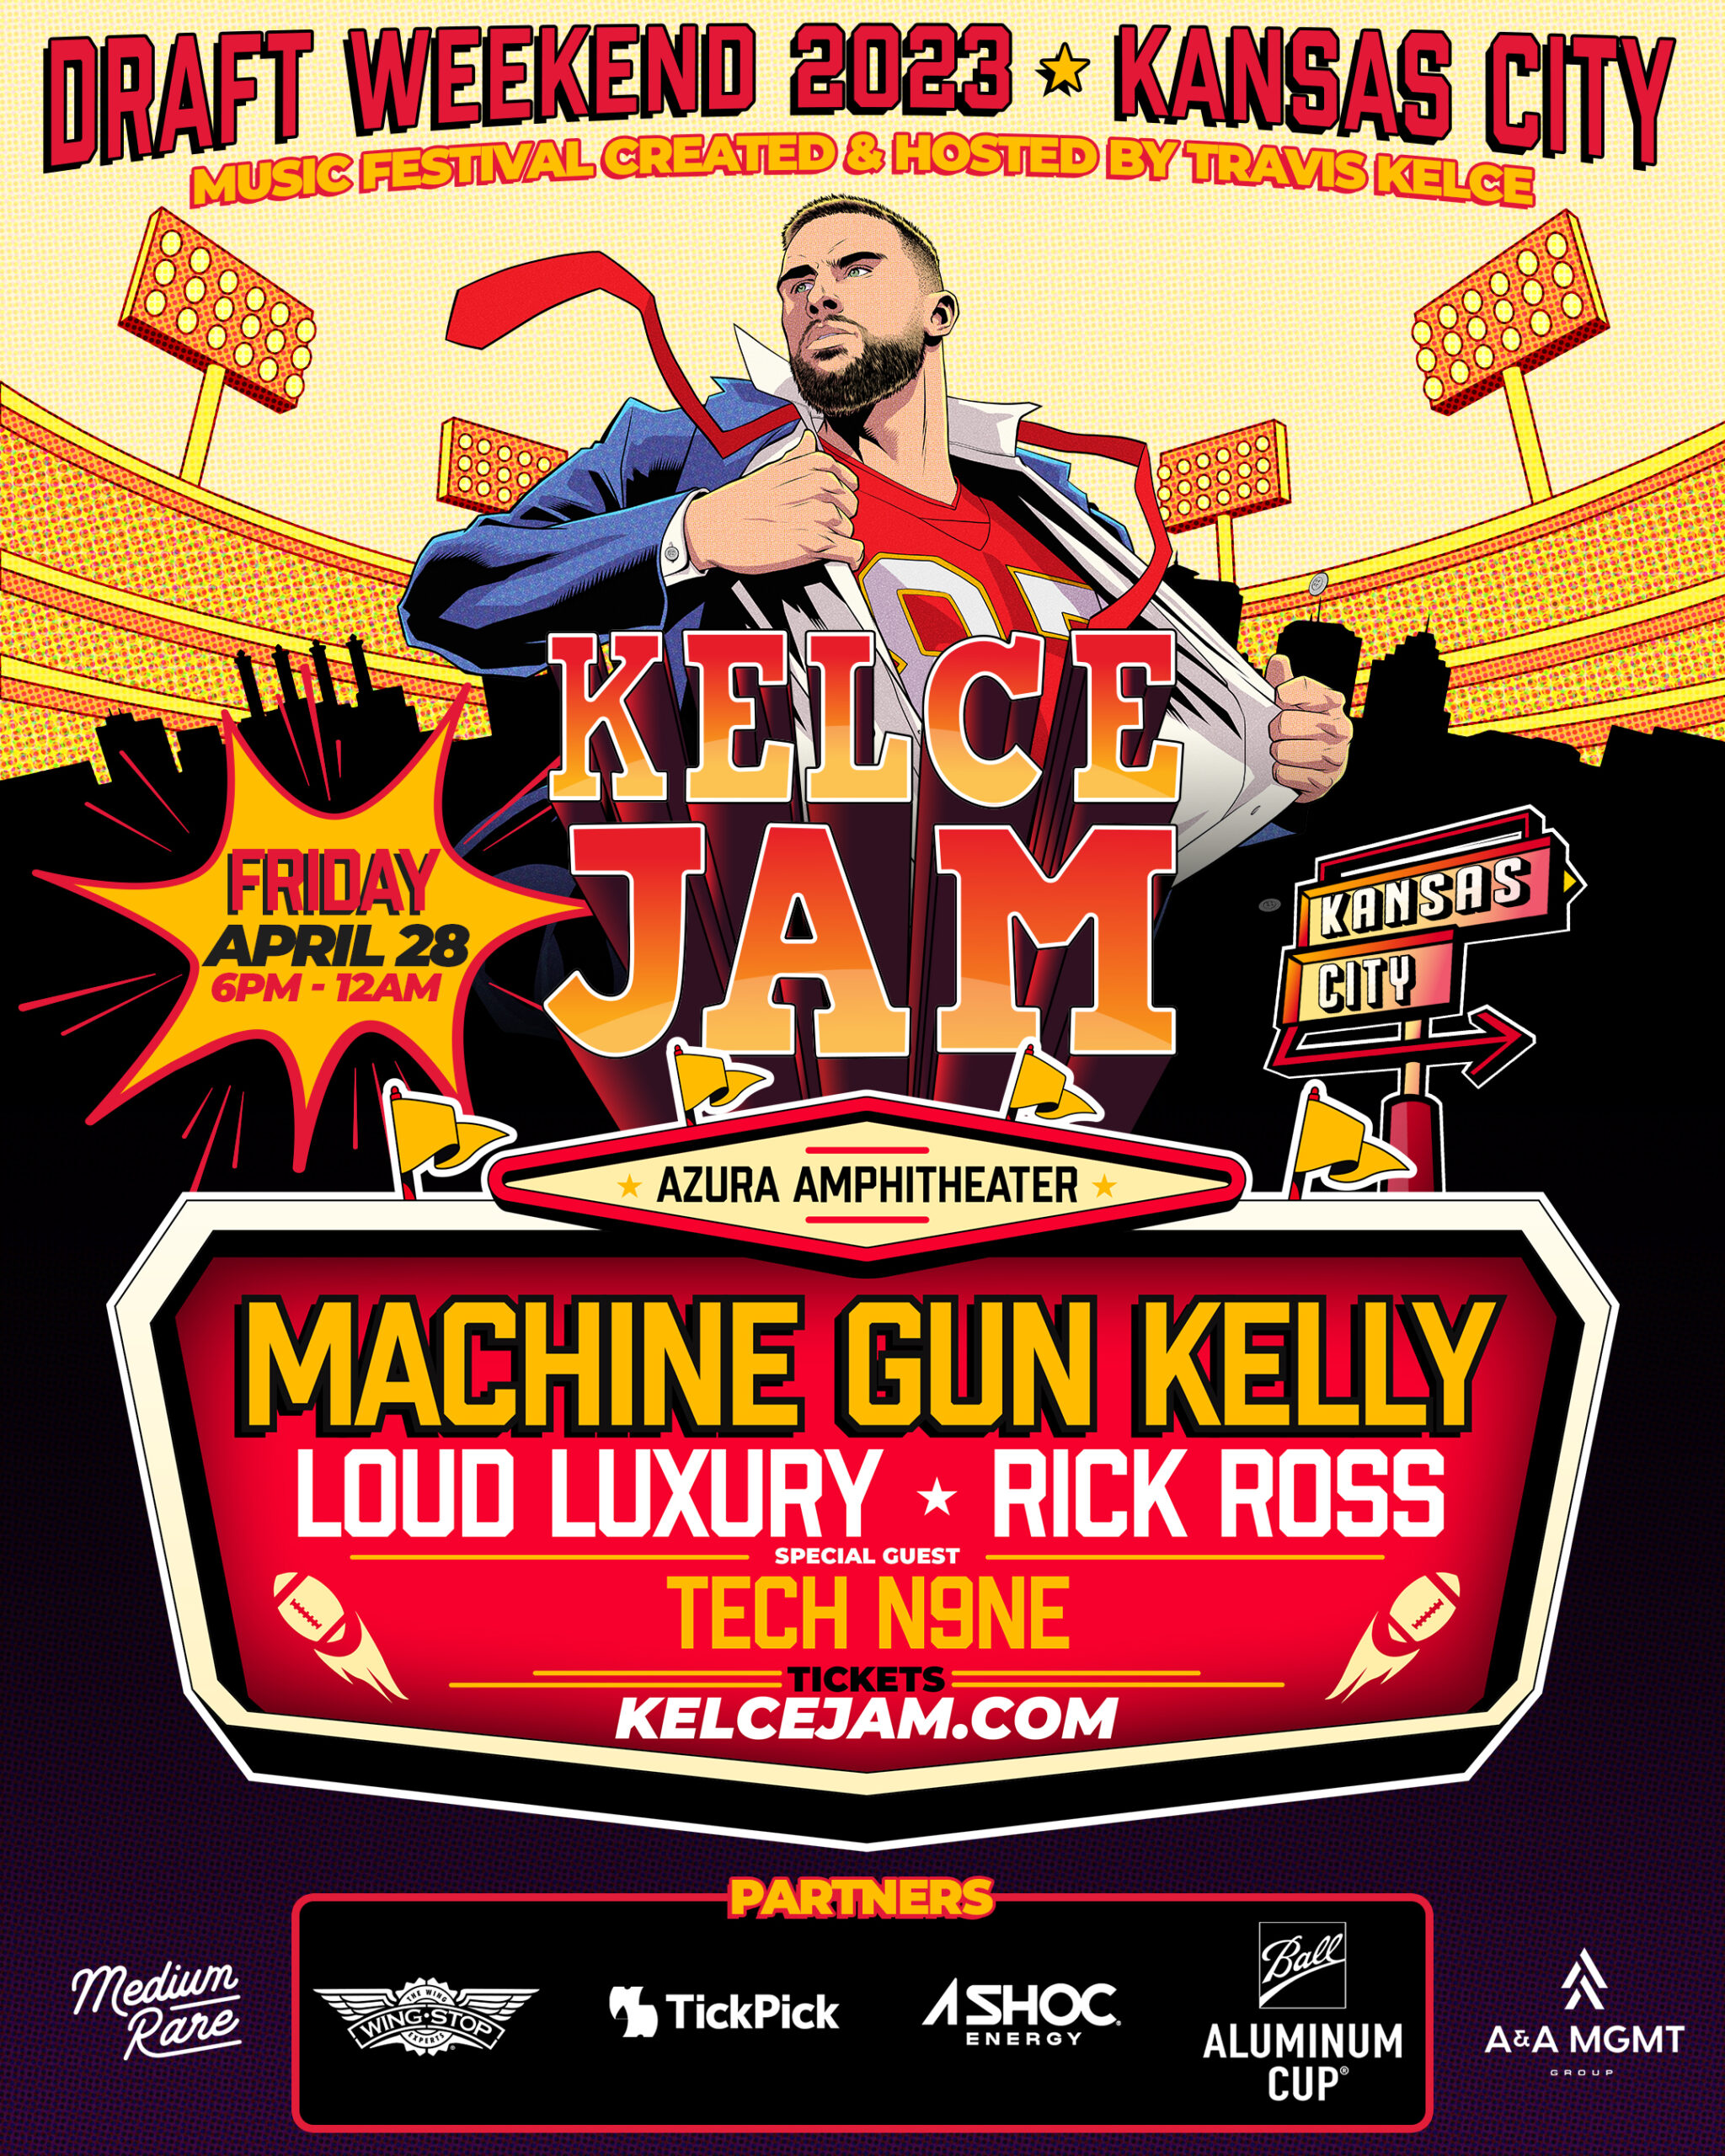 Super Bowl Winner Travis Kelce Announces Kelce Jam Festival Featuring